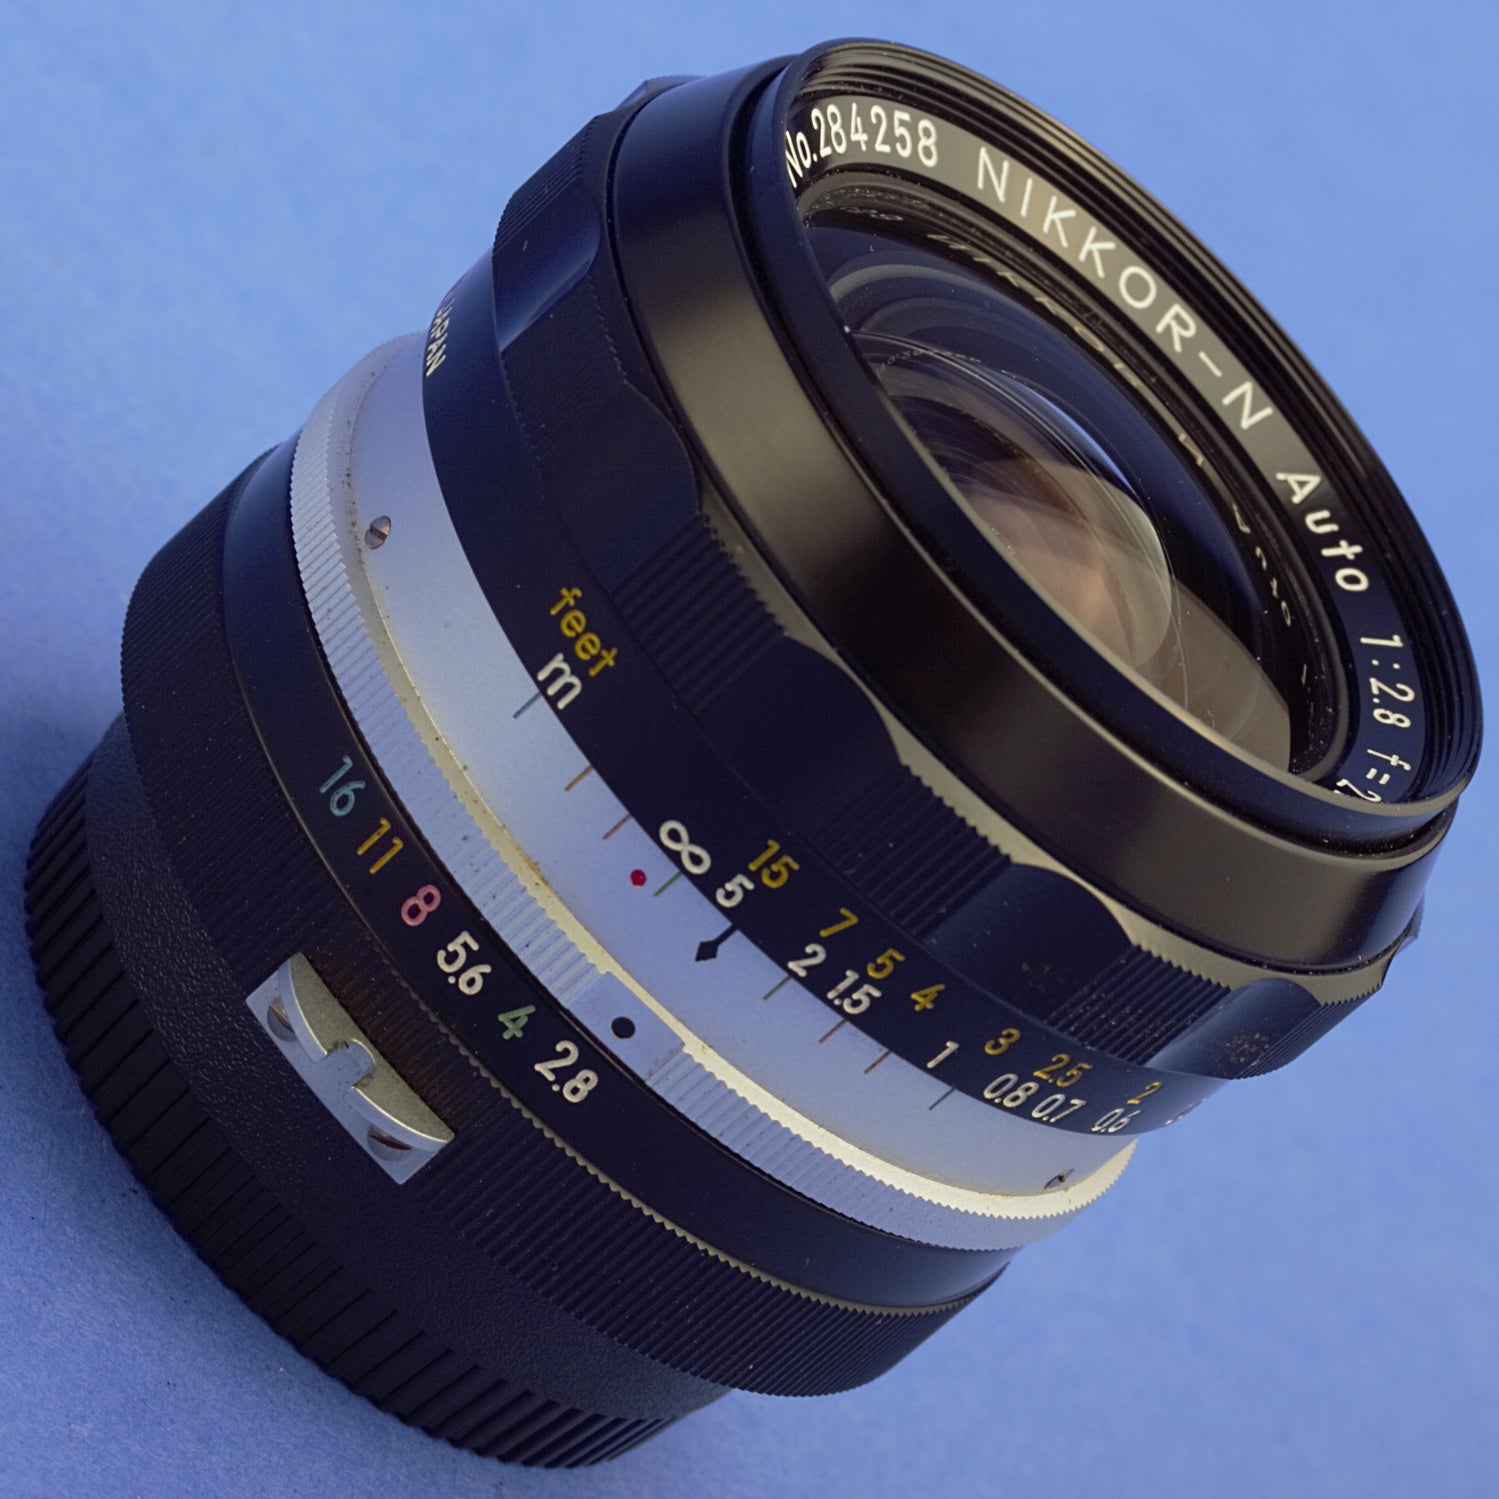 Nikon Nikkor-N 24mm 2.8 Non-Ai Lens